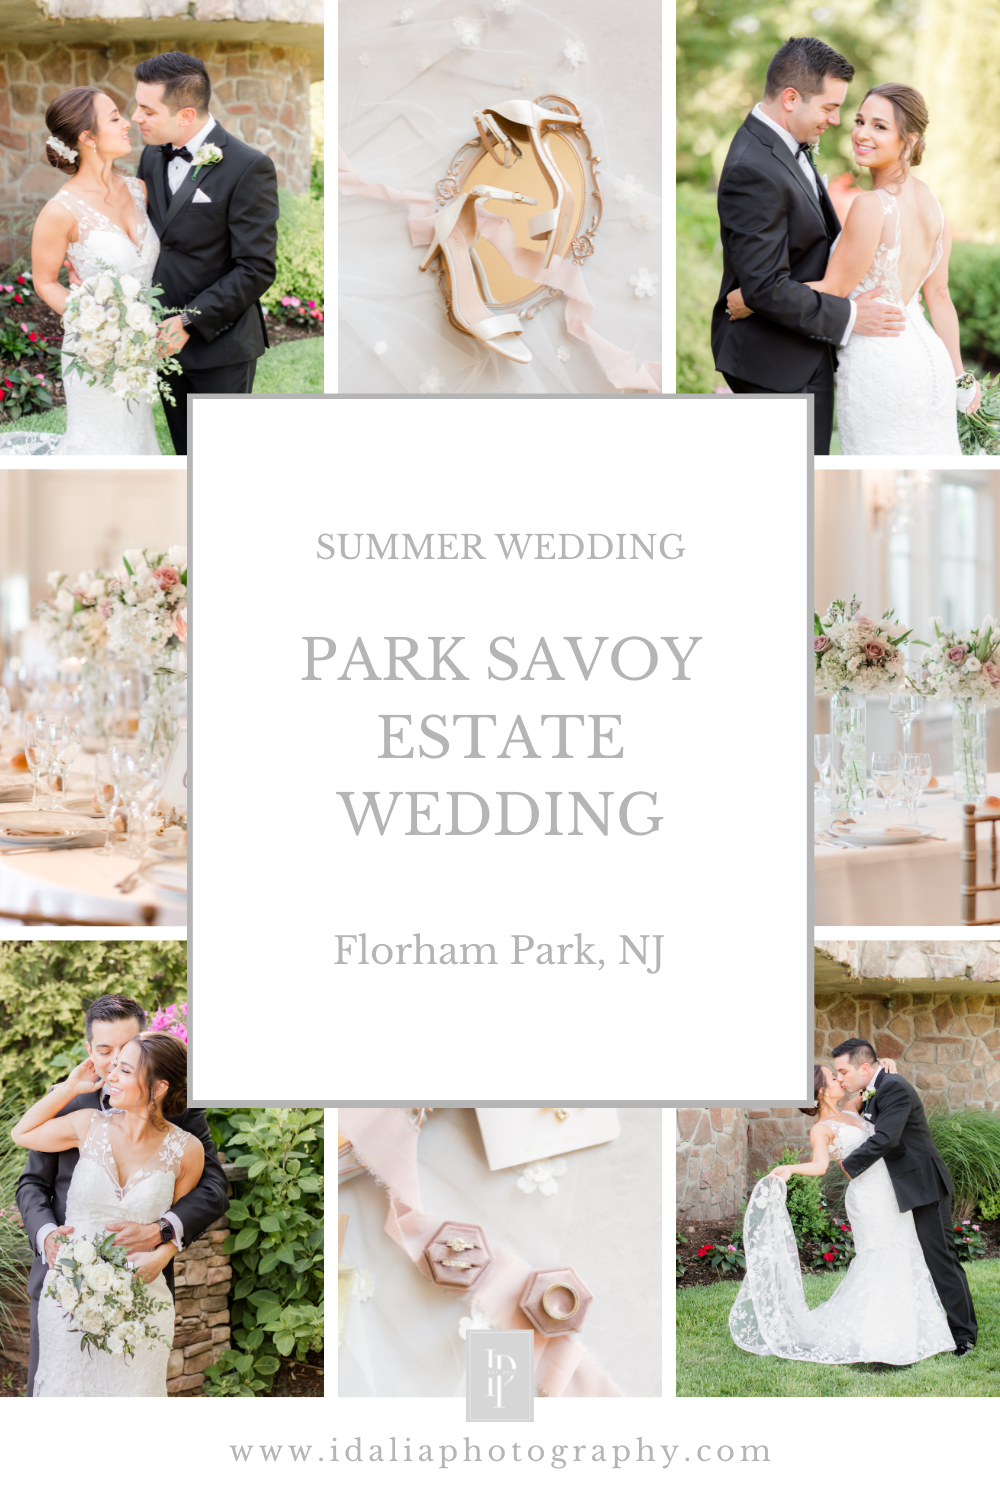 Park Savoy Estate wedding photographed by Idalia Photography